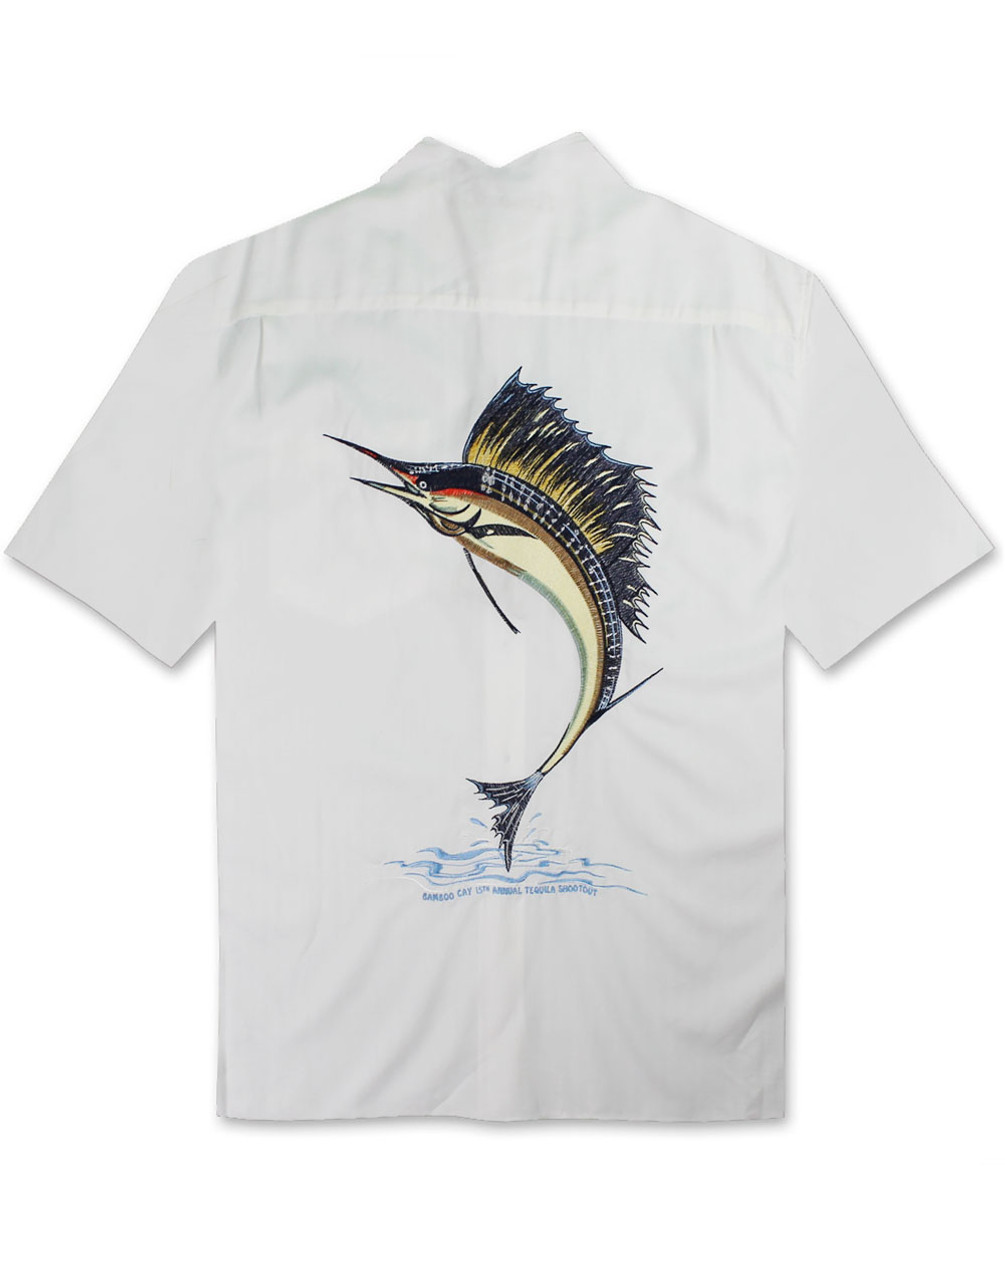 Sailfish Shootout Embroidered Polynosic Camp Shirt by Bamboo Cay